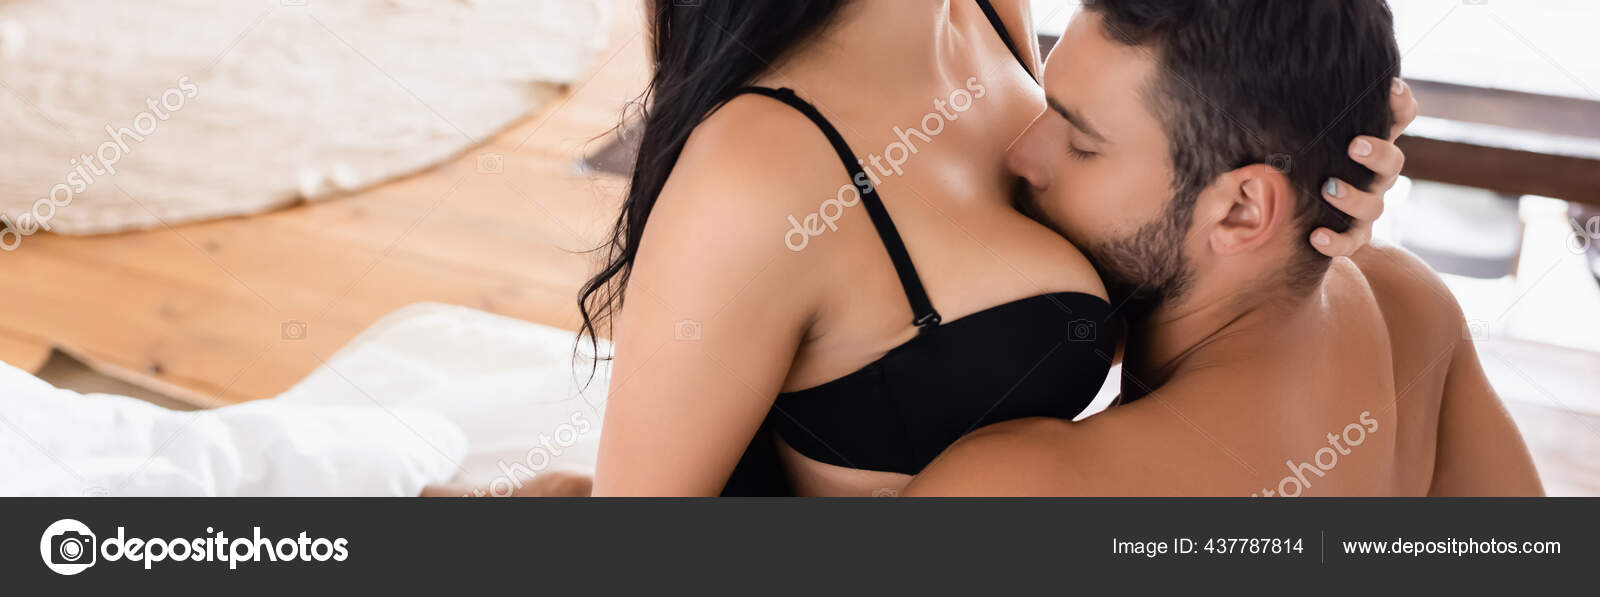 Man Kissing Woman Boobs